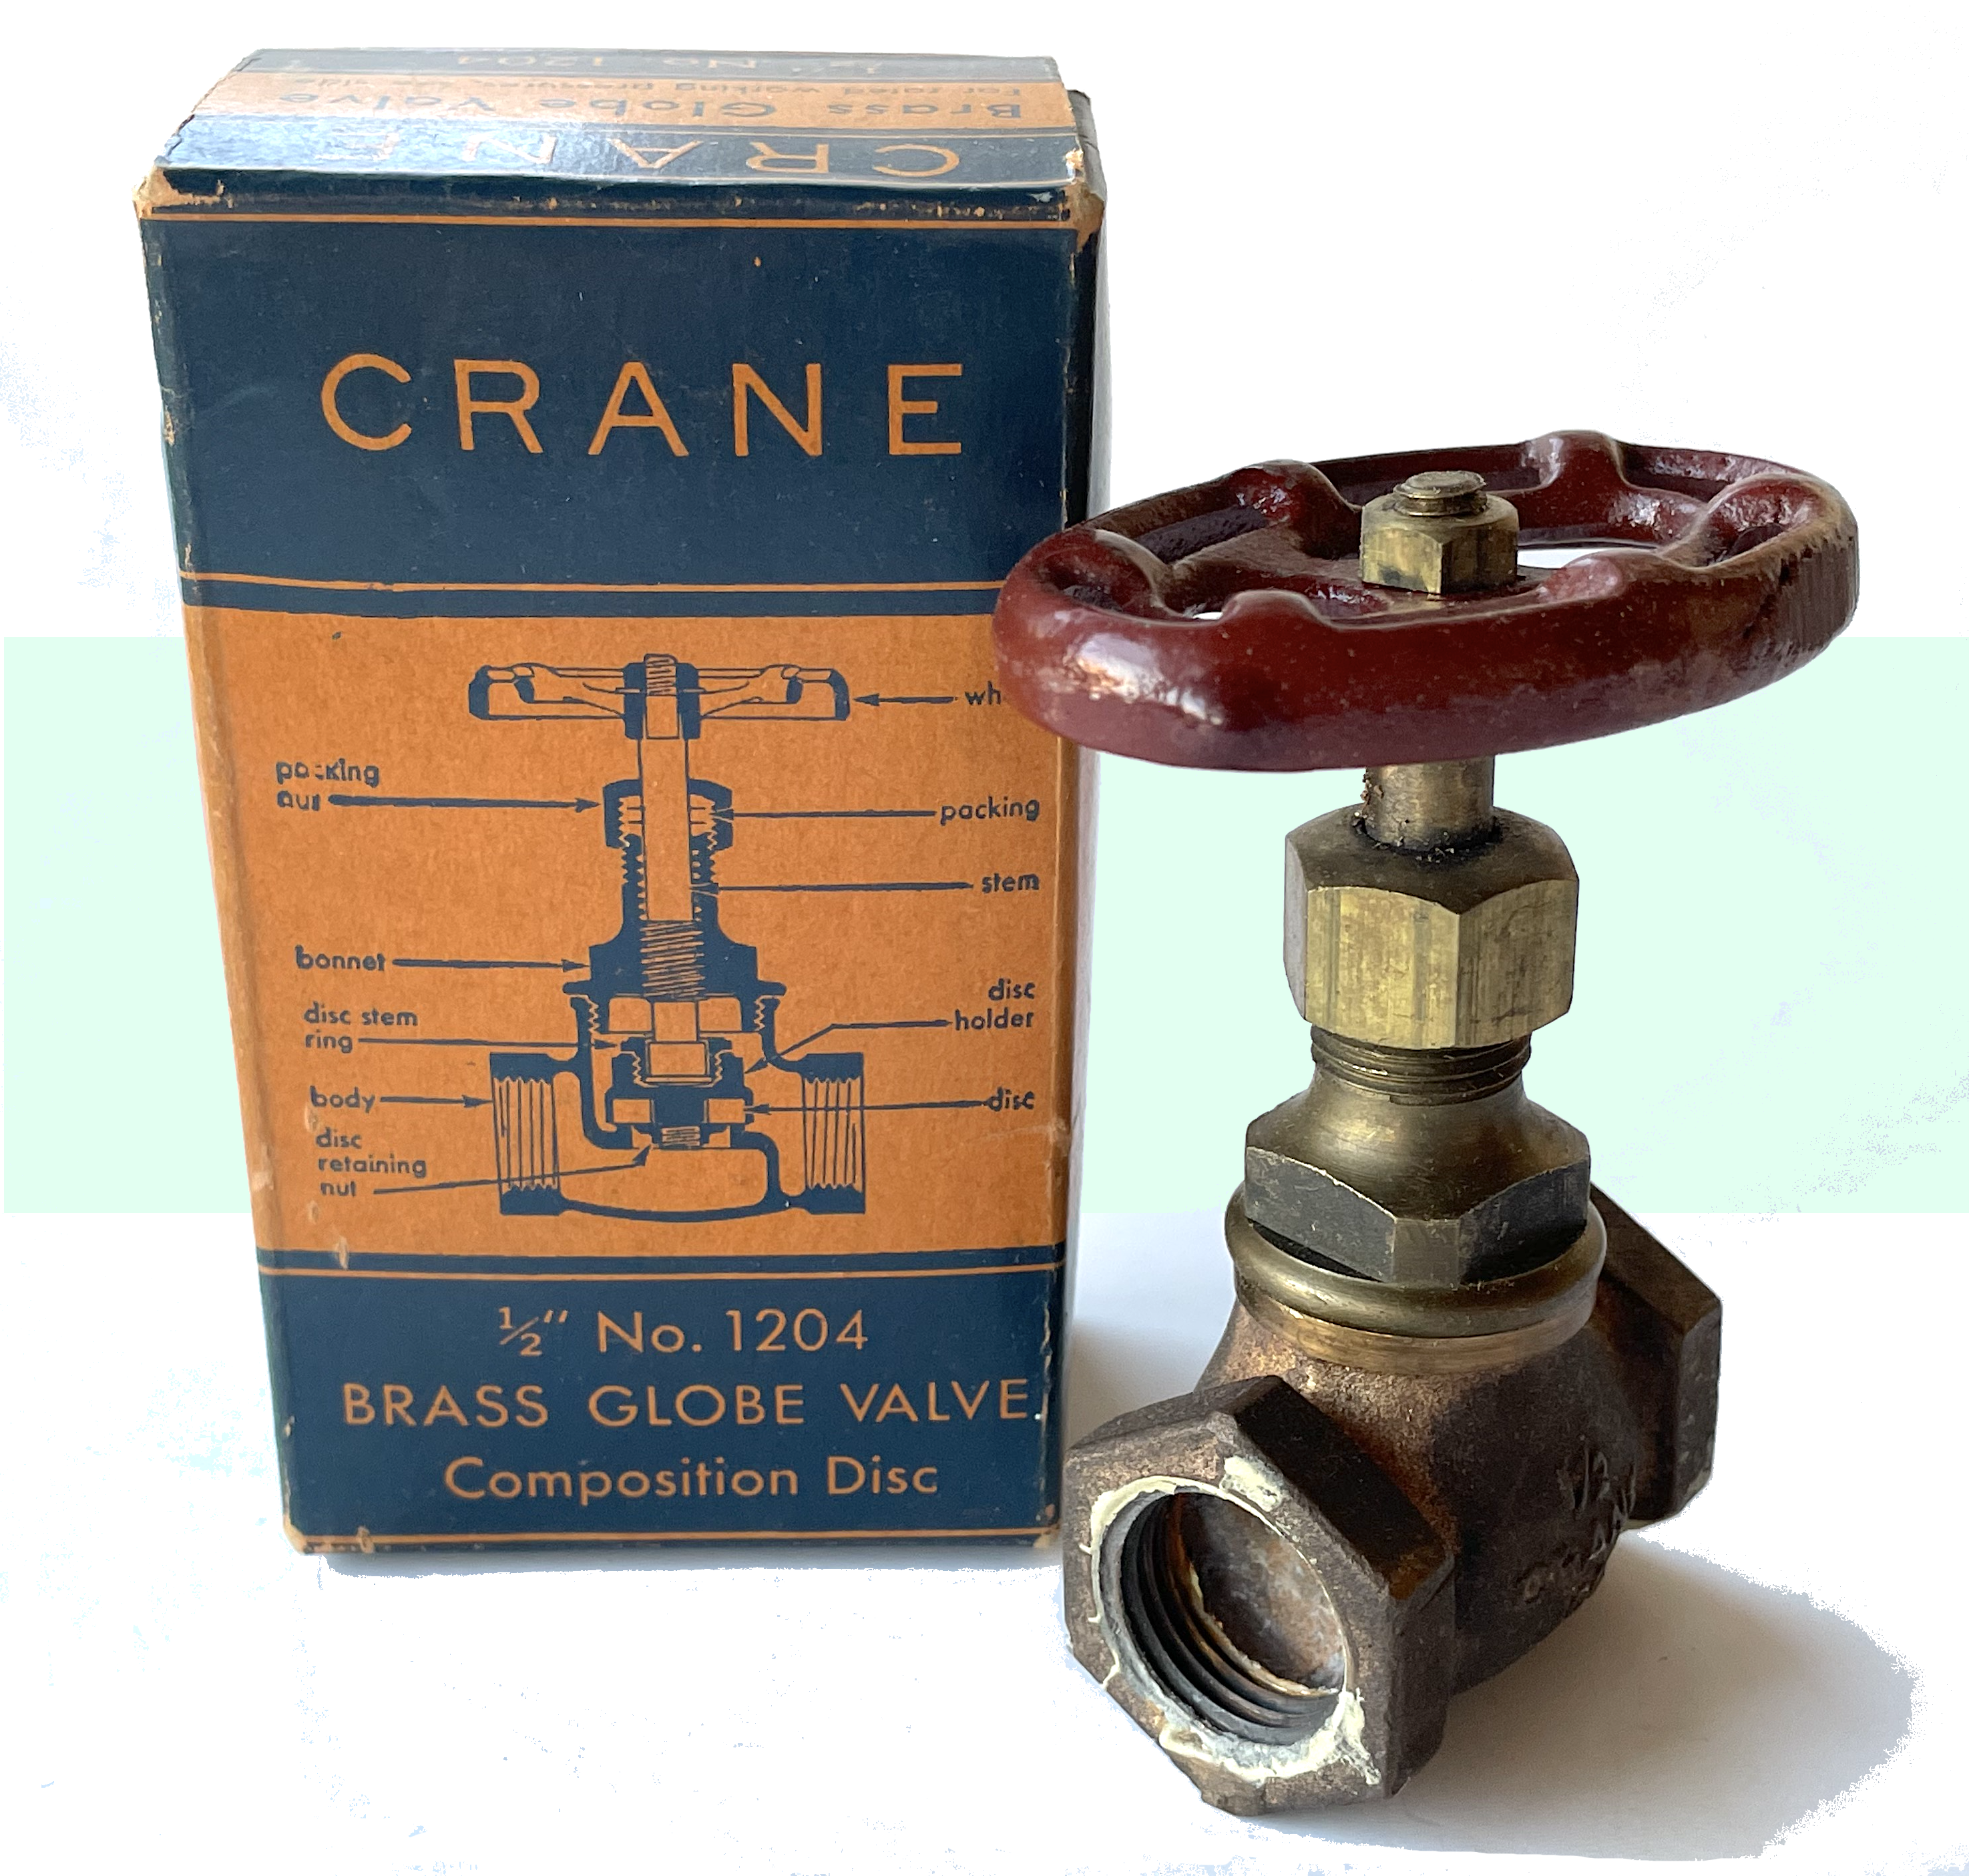 Crane Company, est. 1855